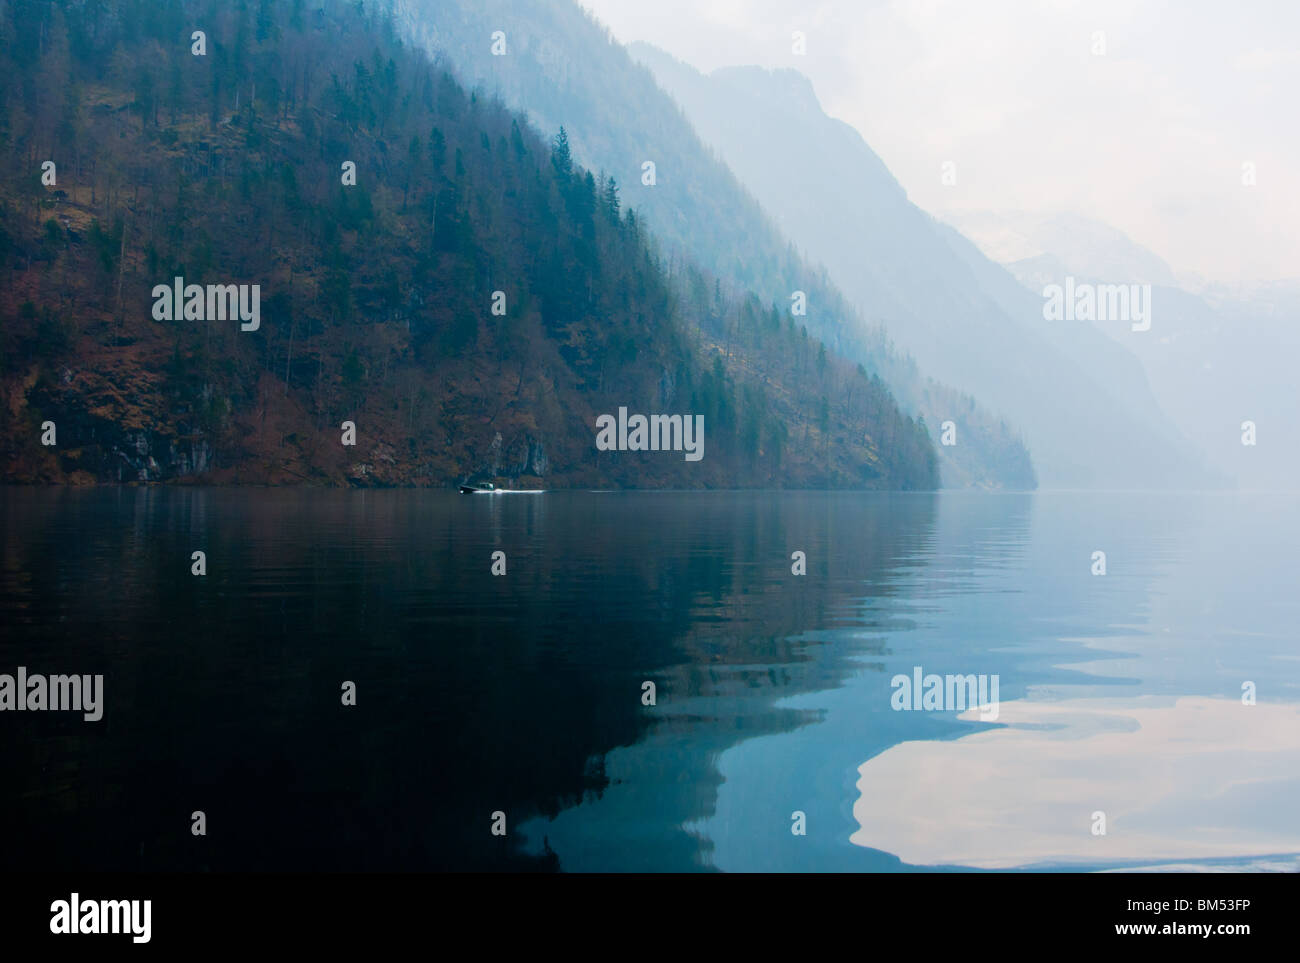 Konigsee (King's lake) in Bavarian Alps, Germany Stock Photo